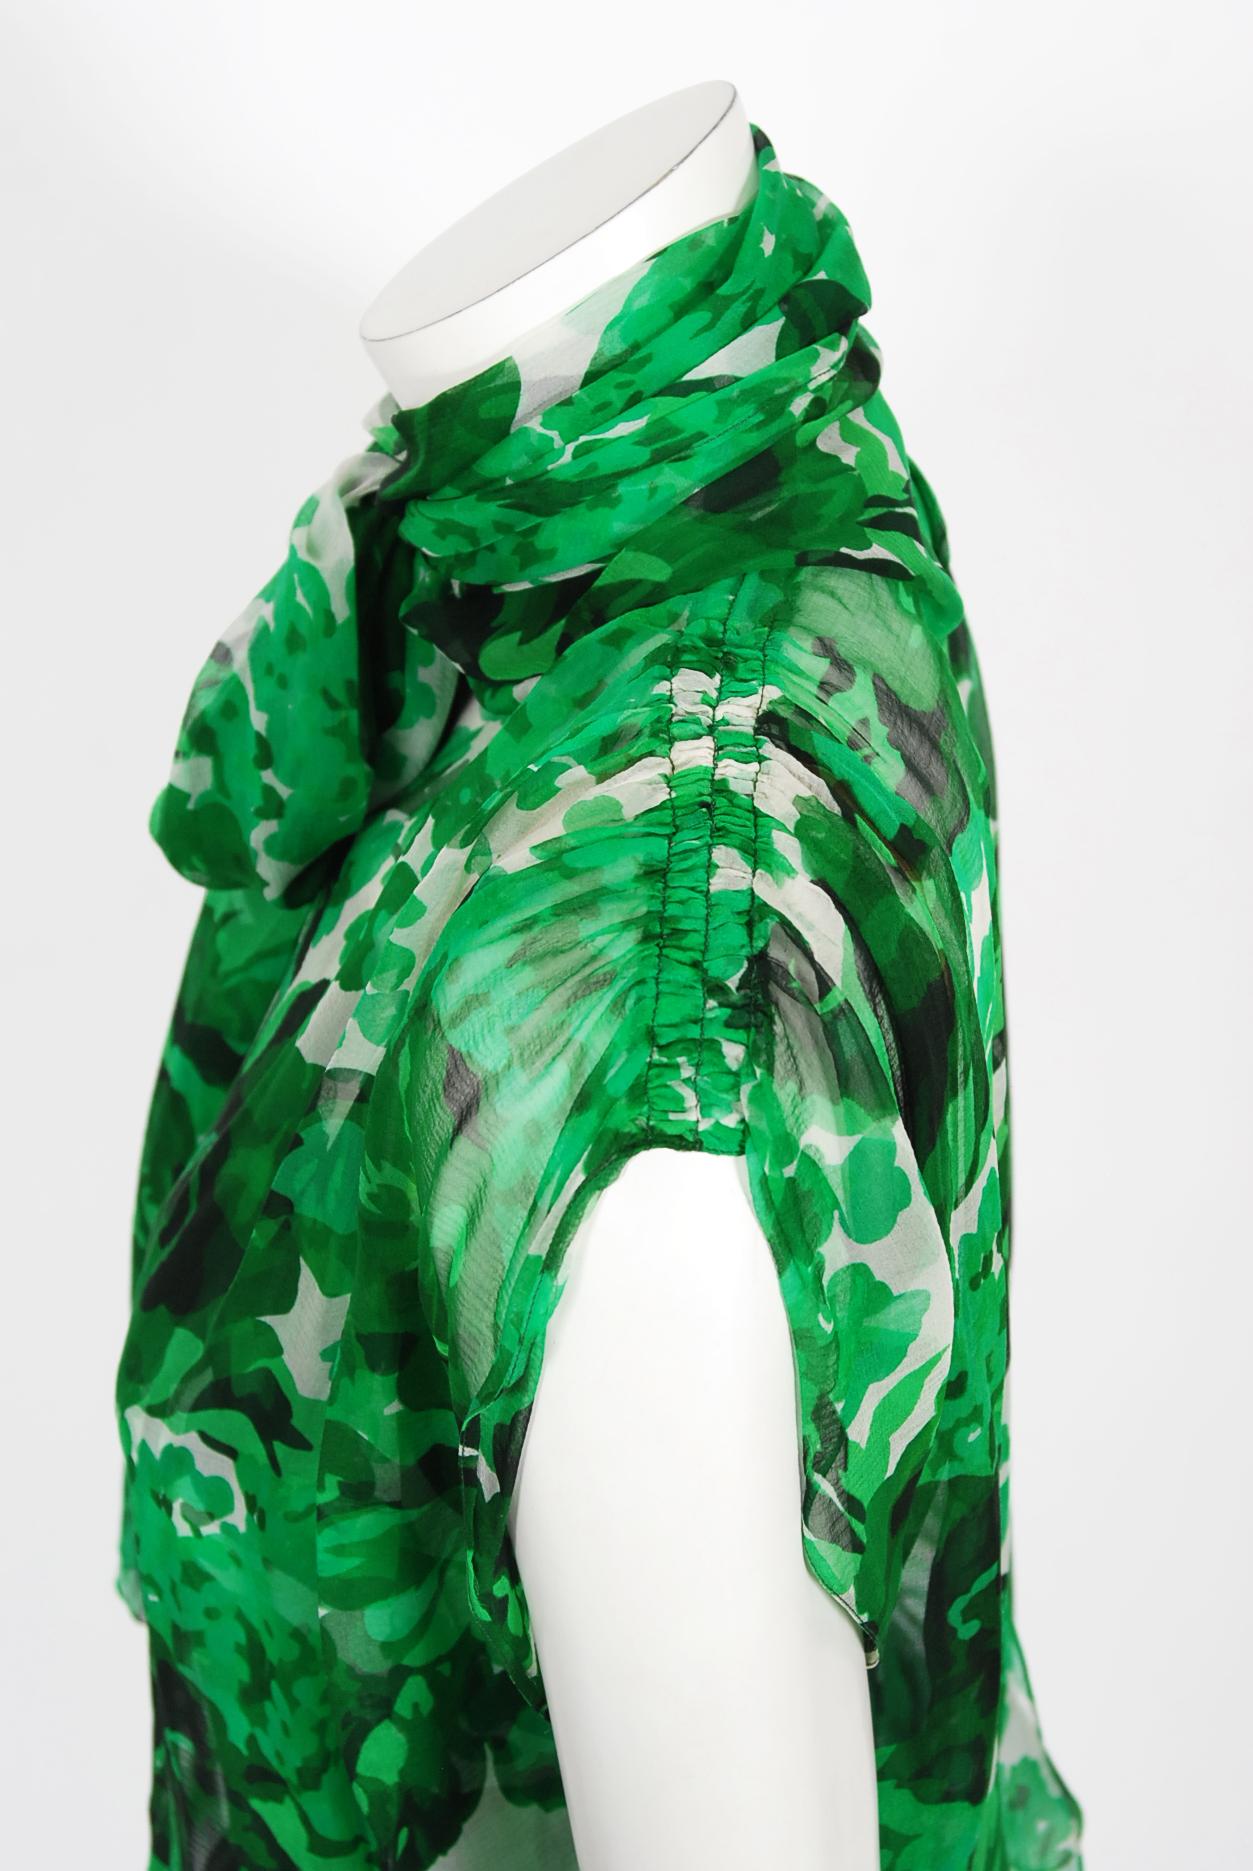 Women's Vintage 1990's Givenchy Paris Green Floral Print Sheer Silk Chiffon Draped Dress For Sale